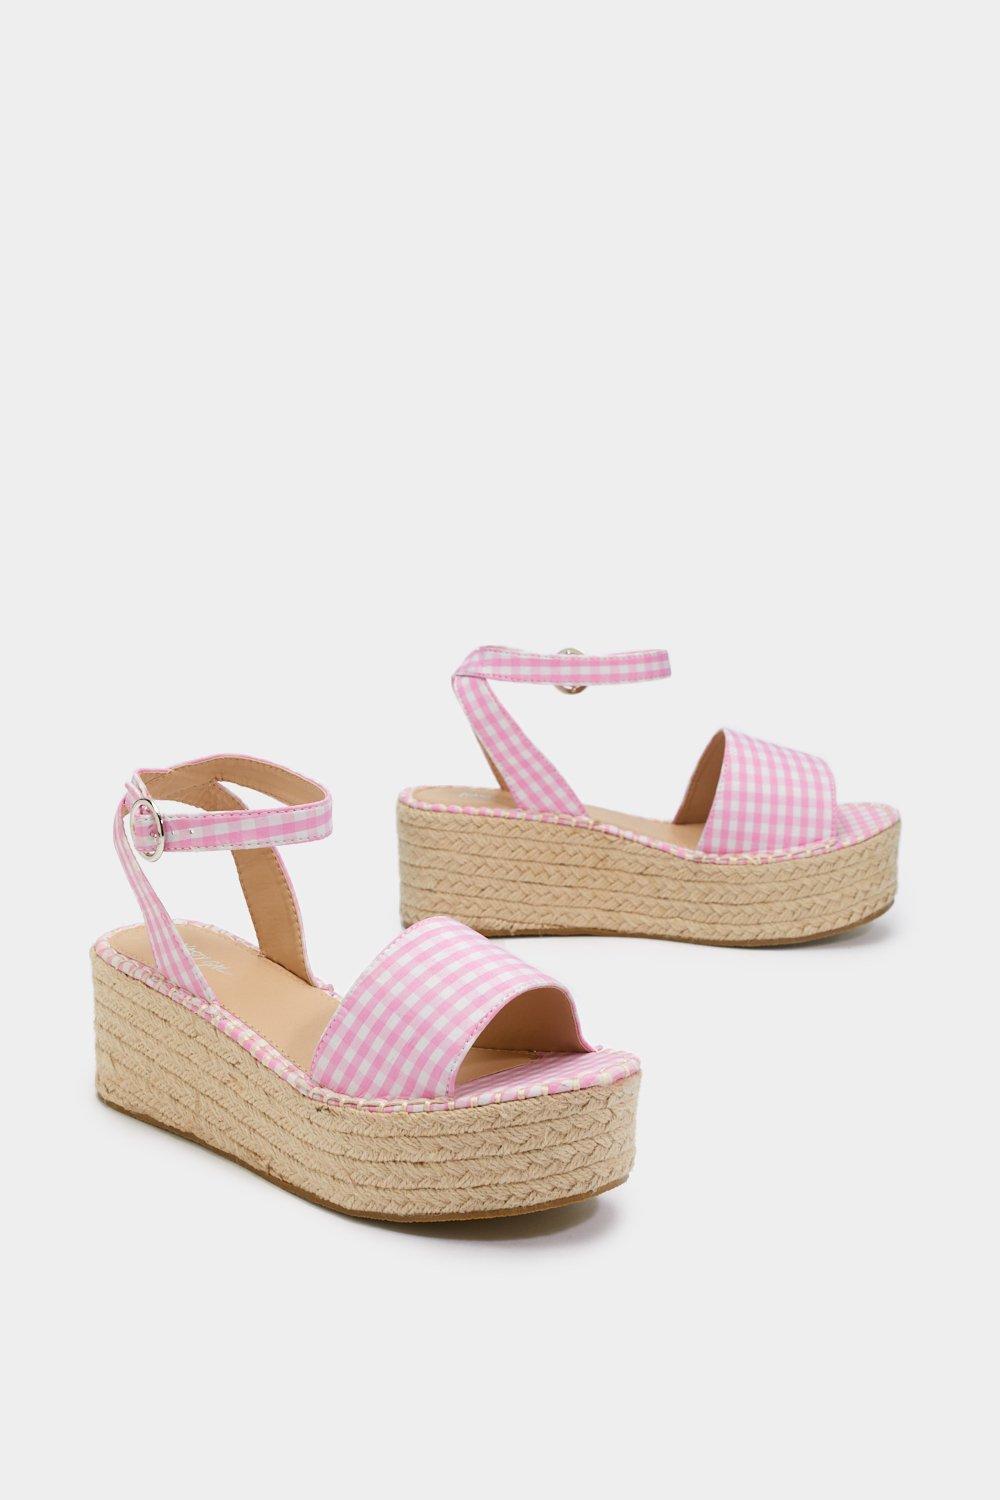 pink gingham sandals